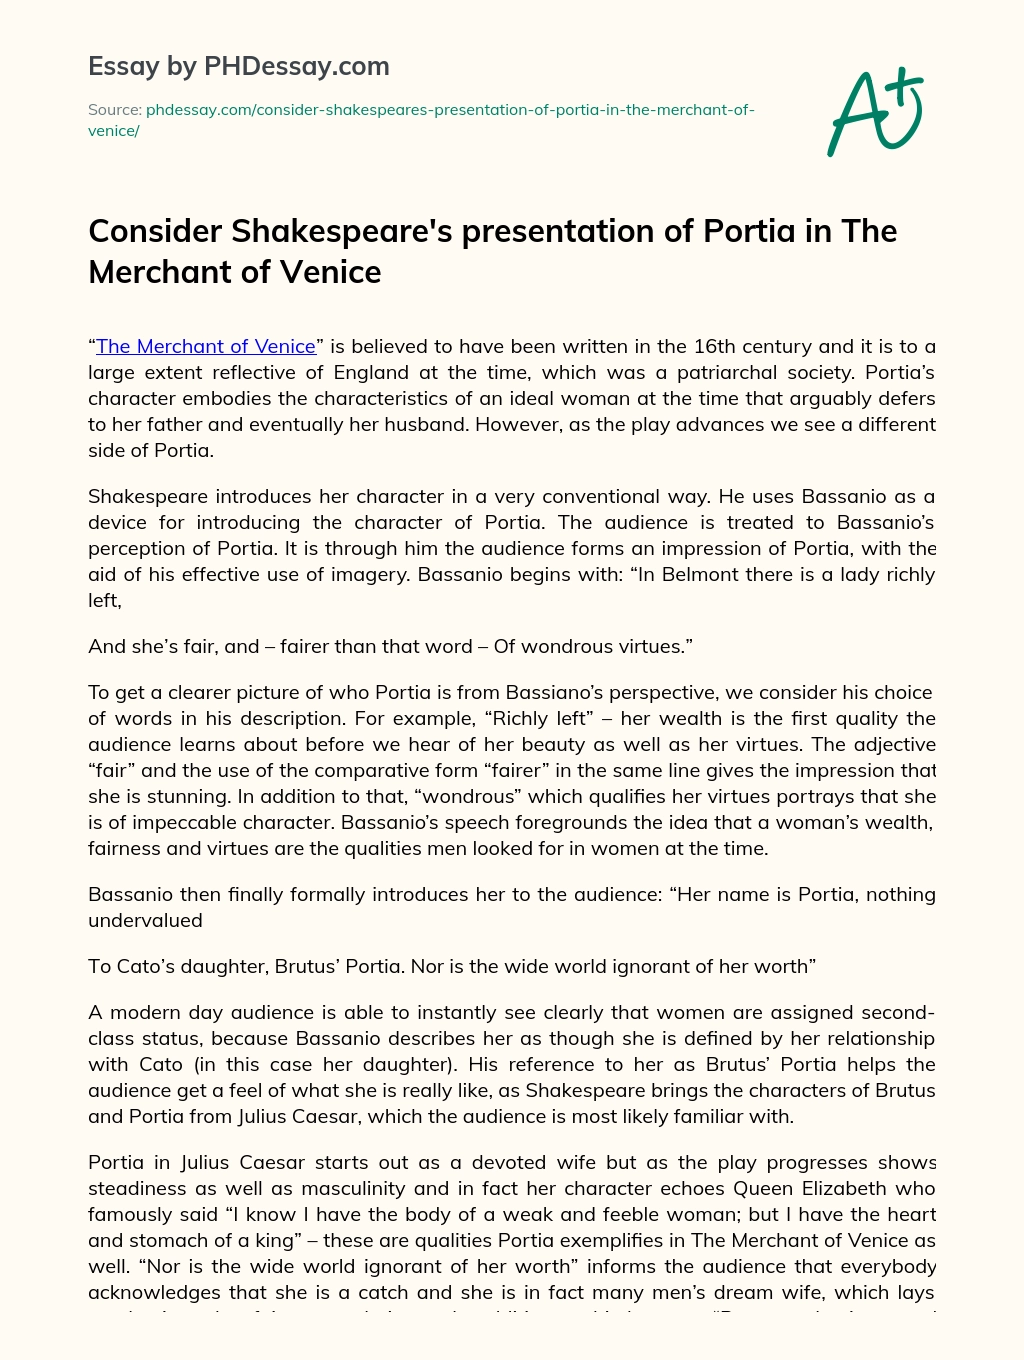 Consider Shakespeare’s presentation of Portia in The Merchant of Venice essay